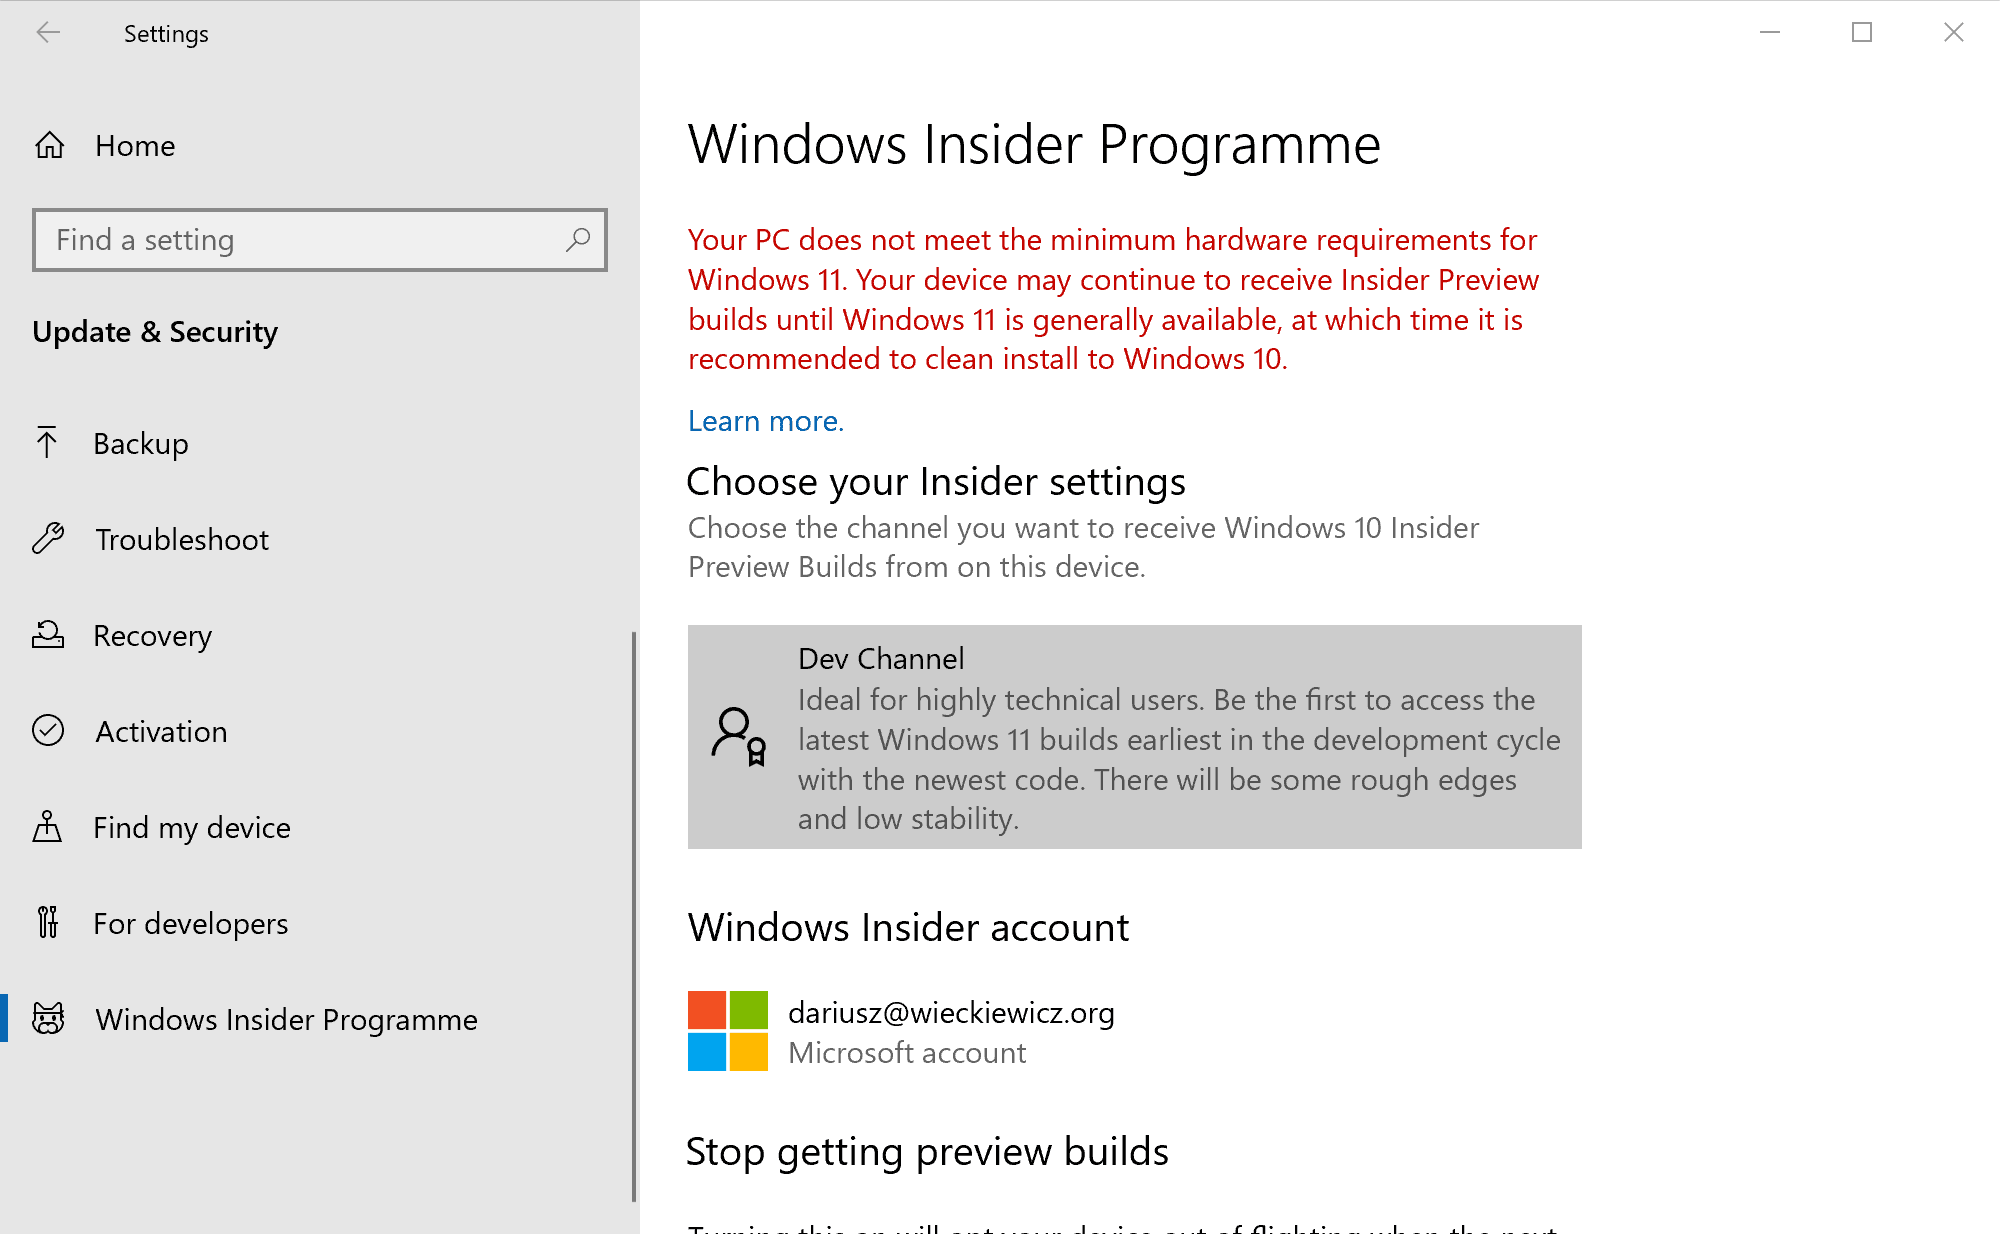 Windows Insider Programme